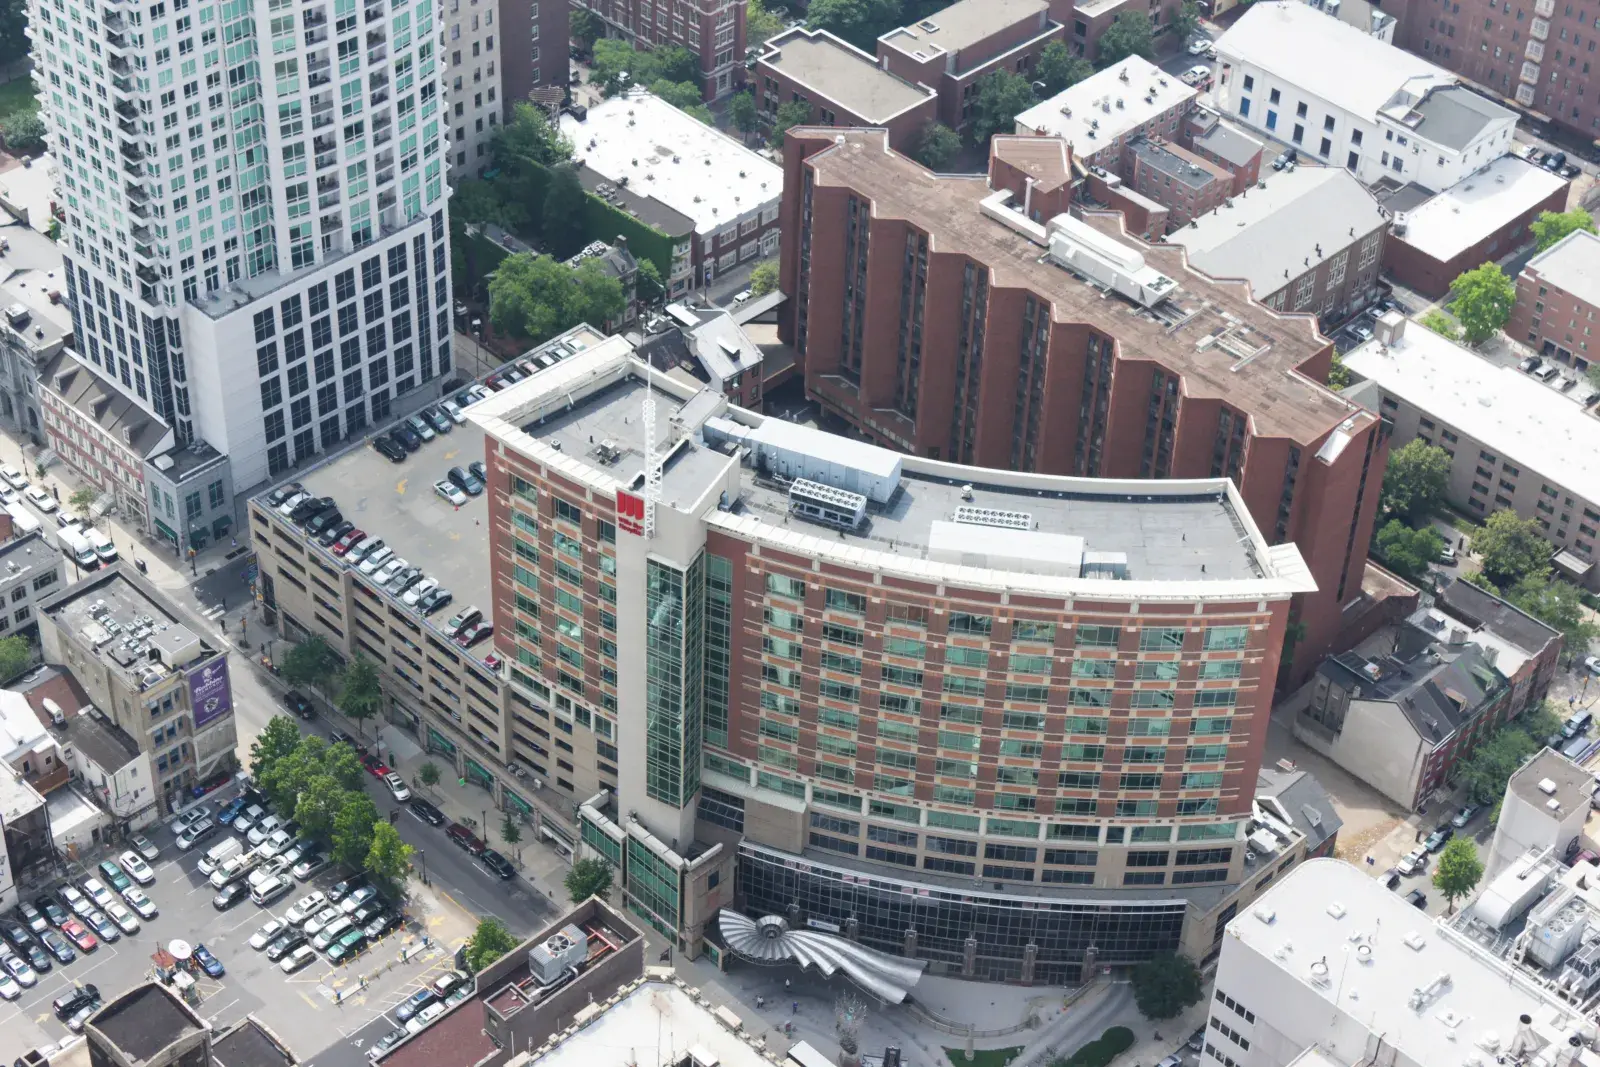 800 Walnut Street in Aerial View